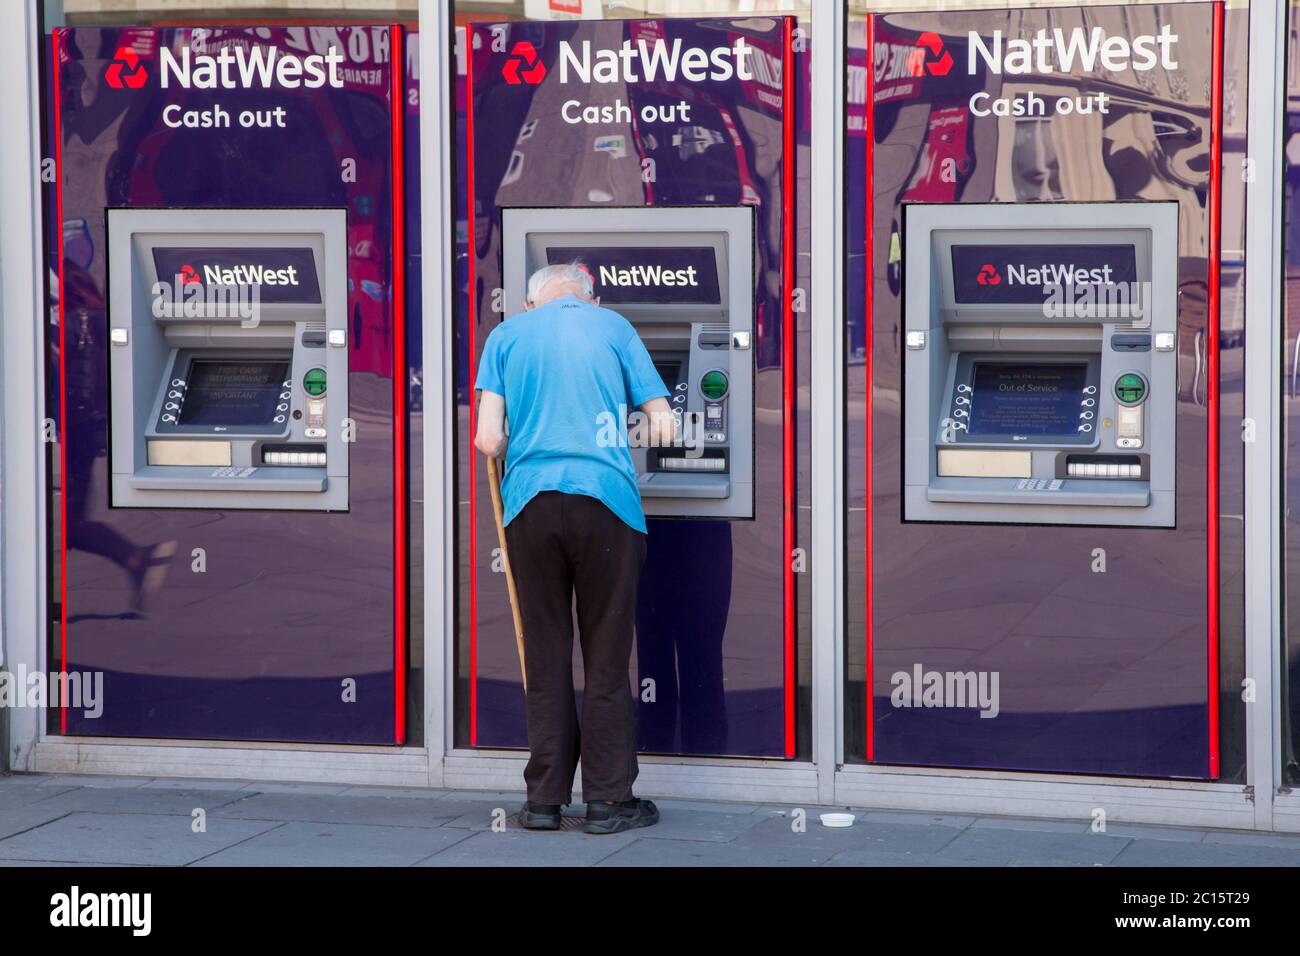 Natwest bank branch cash machines Stock Photo